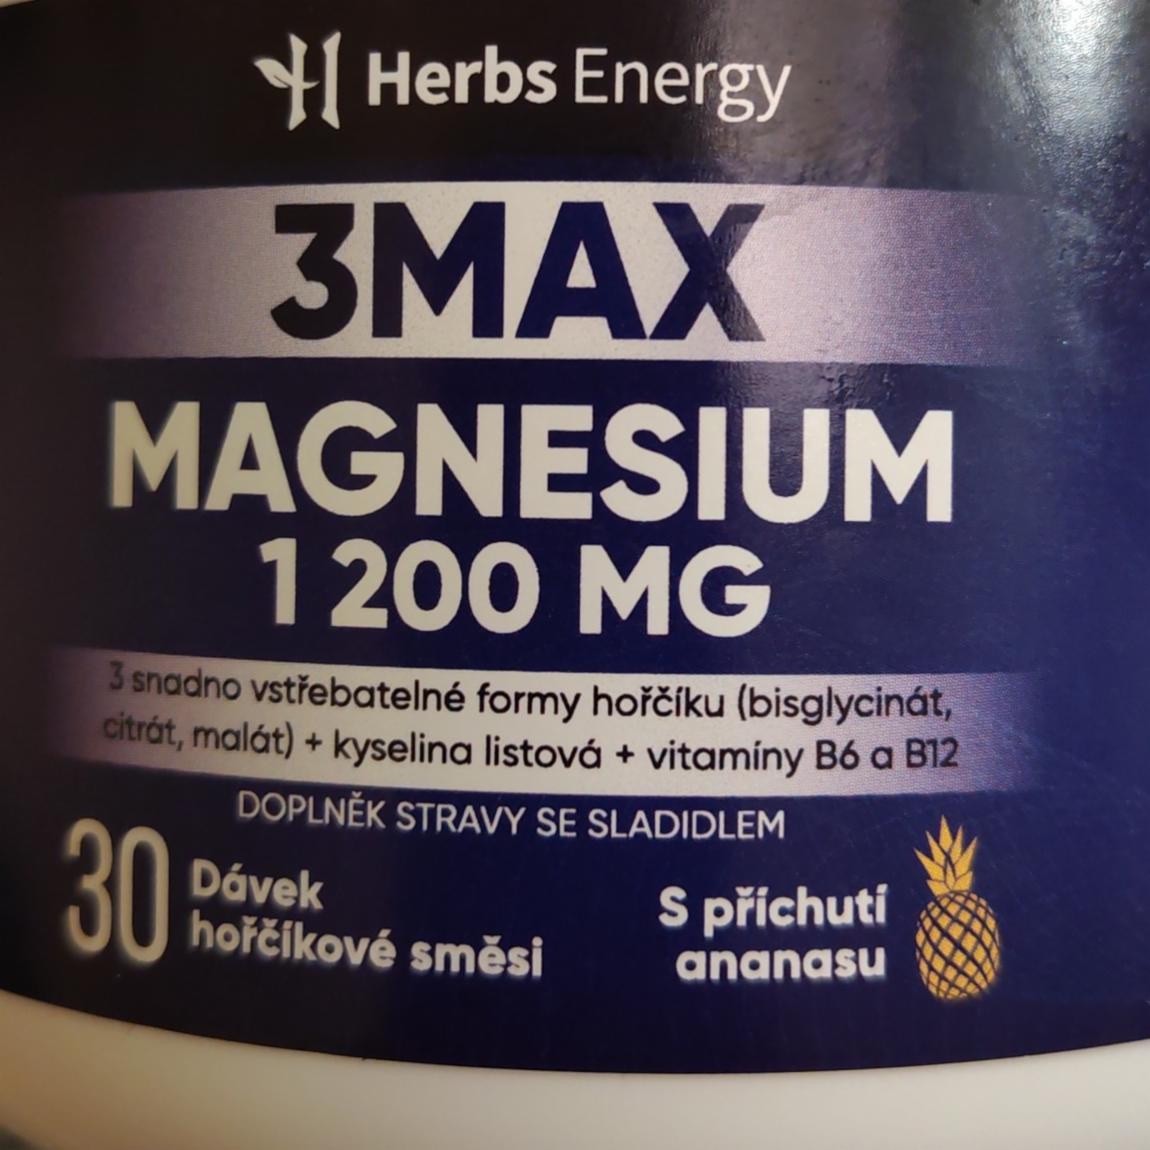 Fotografie - 3Max Magnesium 1200mg Herbs Energy